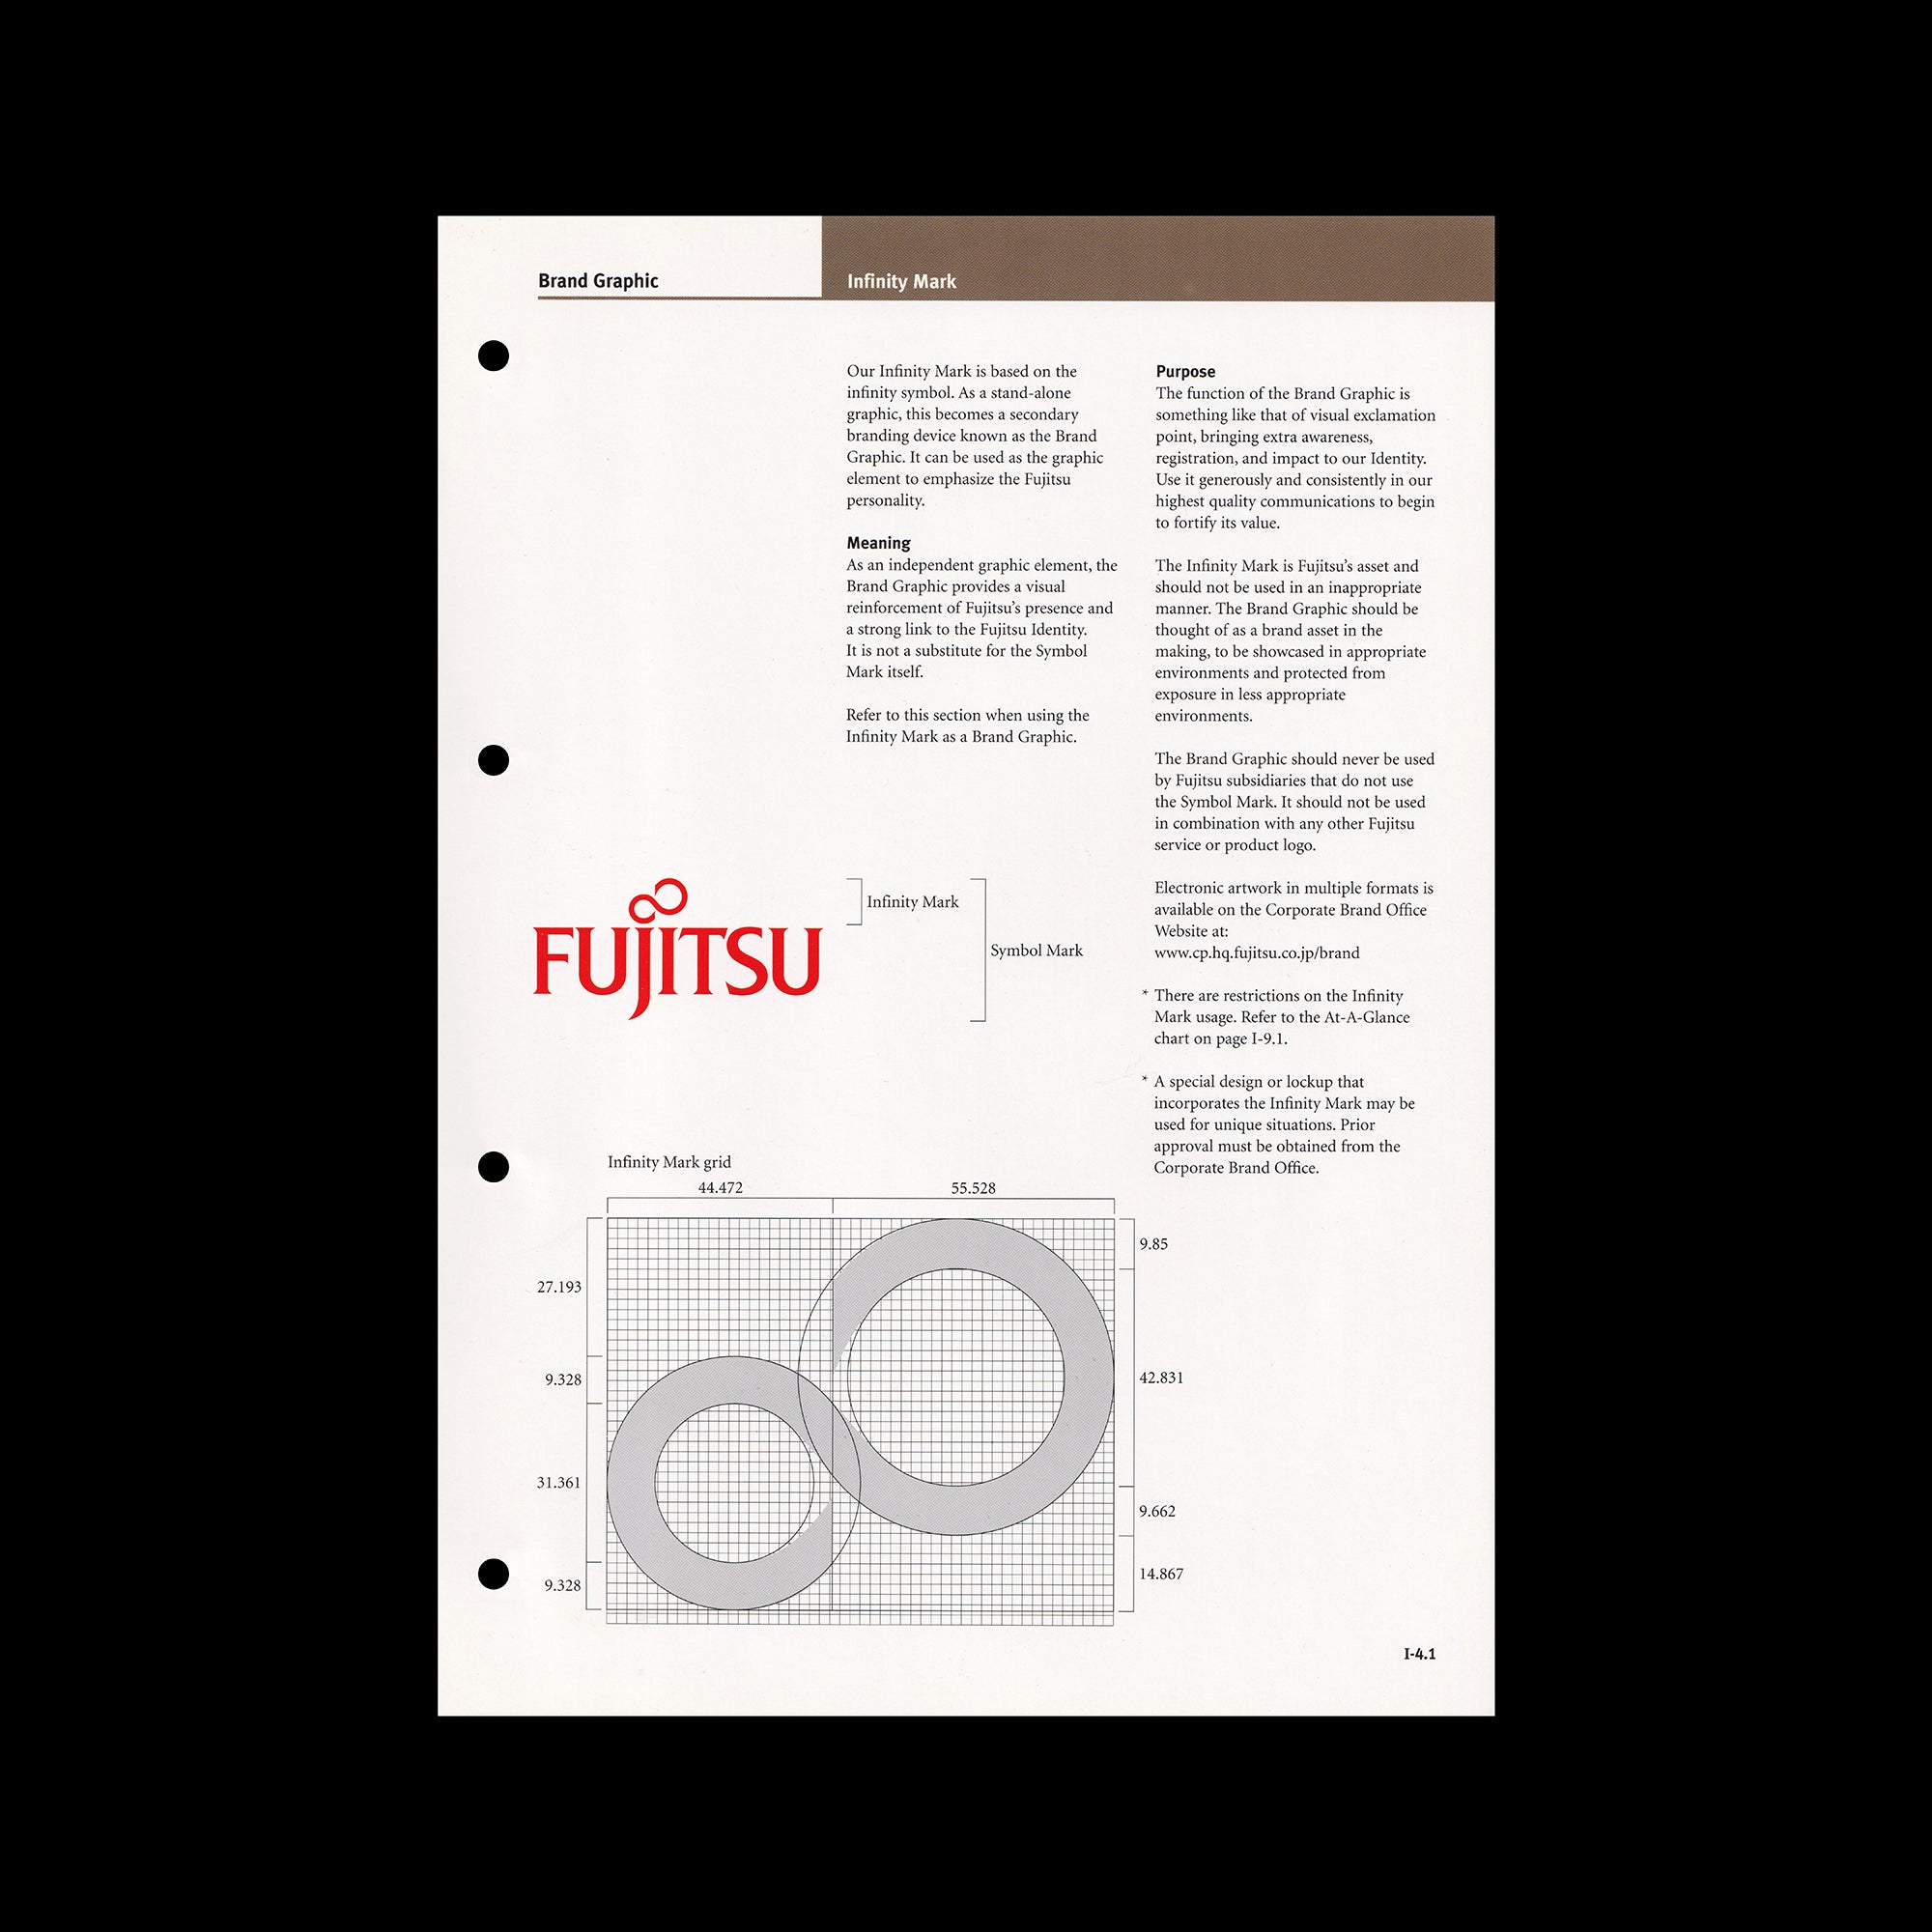 Fujitsu Brand Manual, 2001